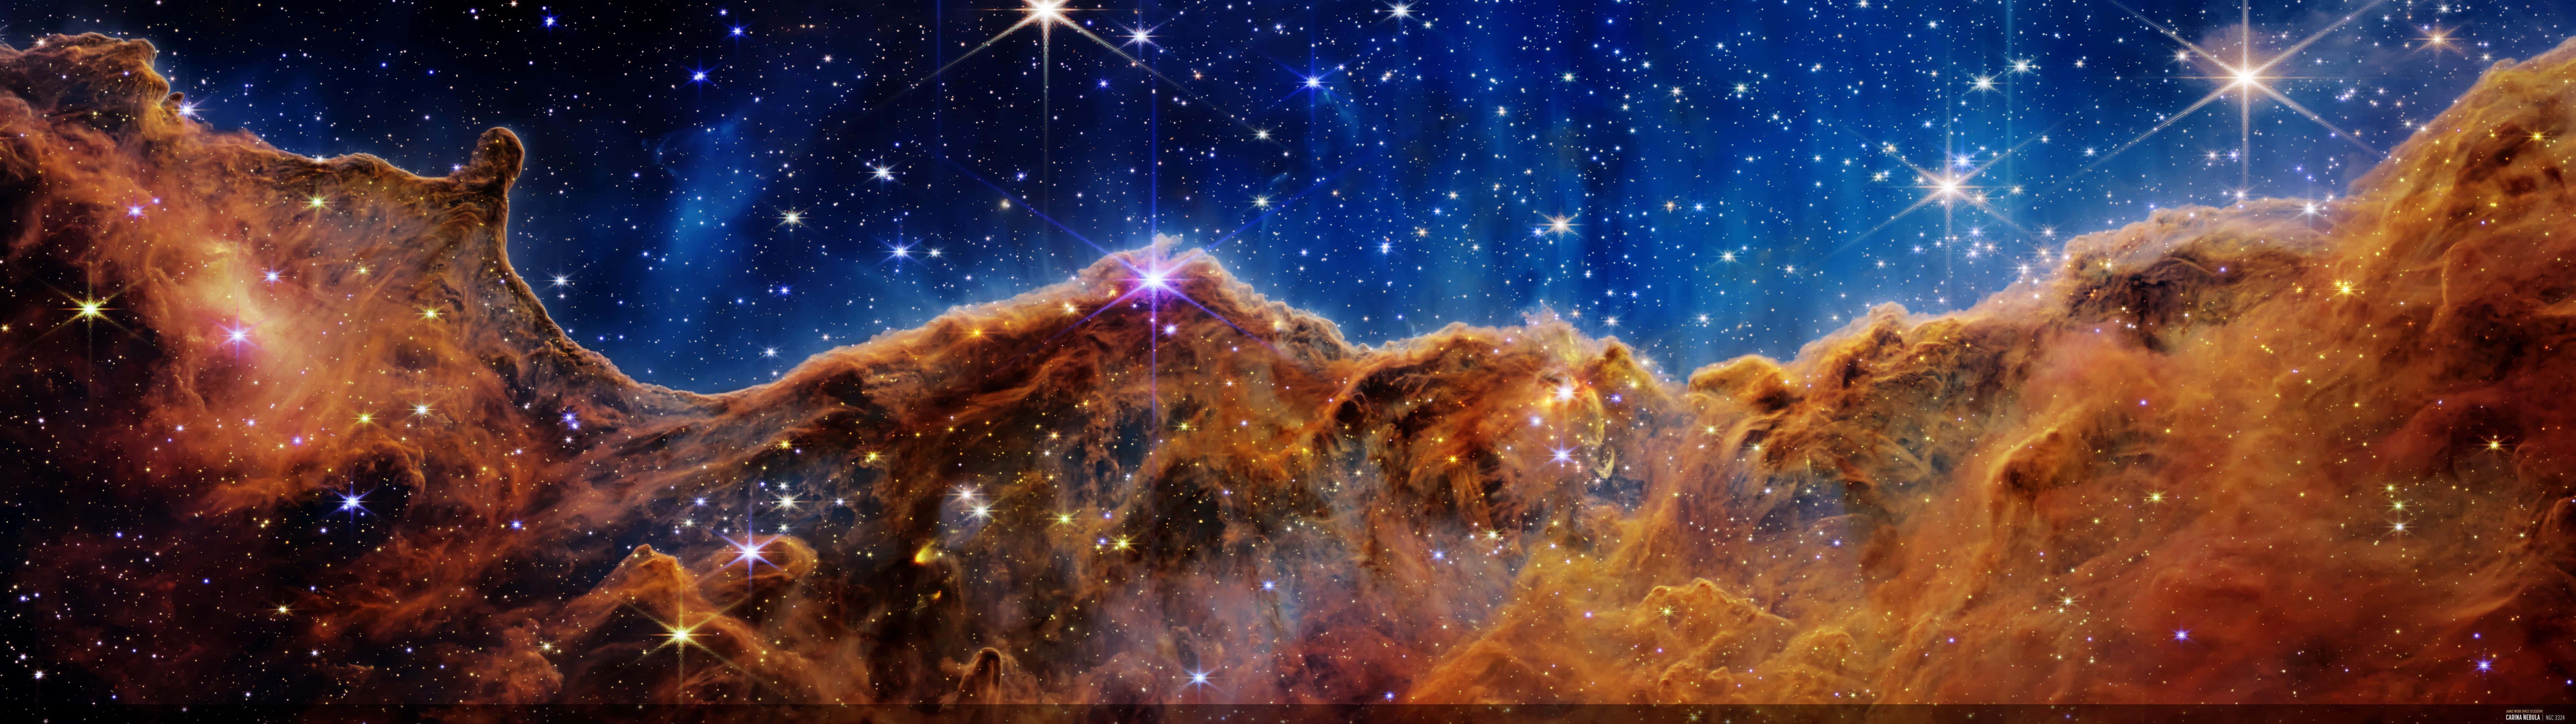 James Webb Telescope Space Scene Picture